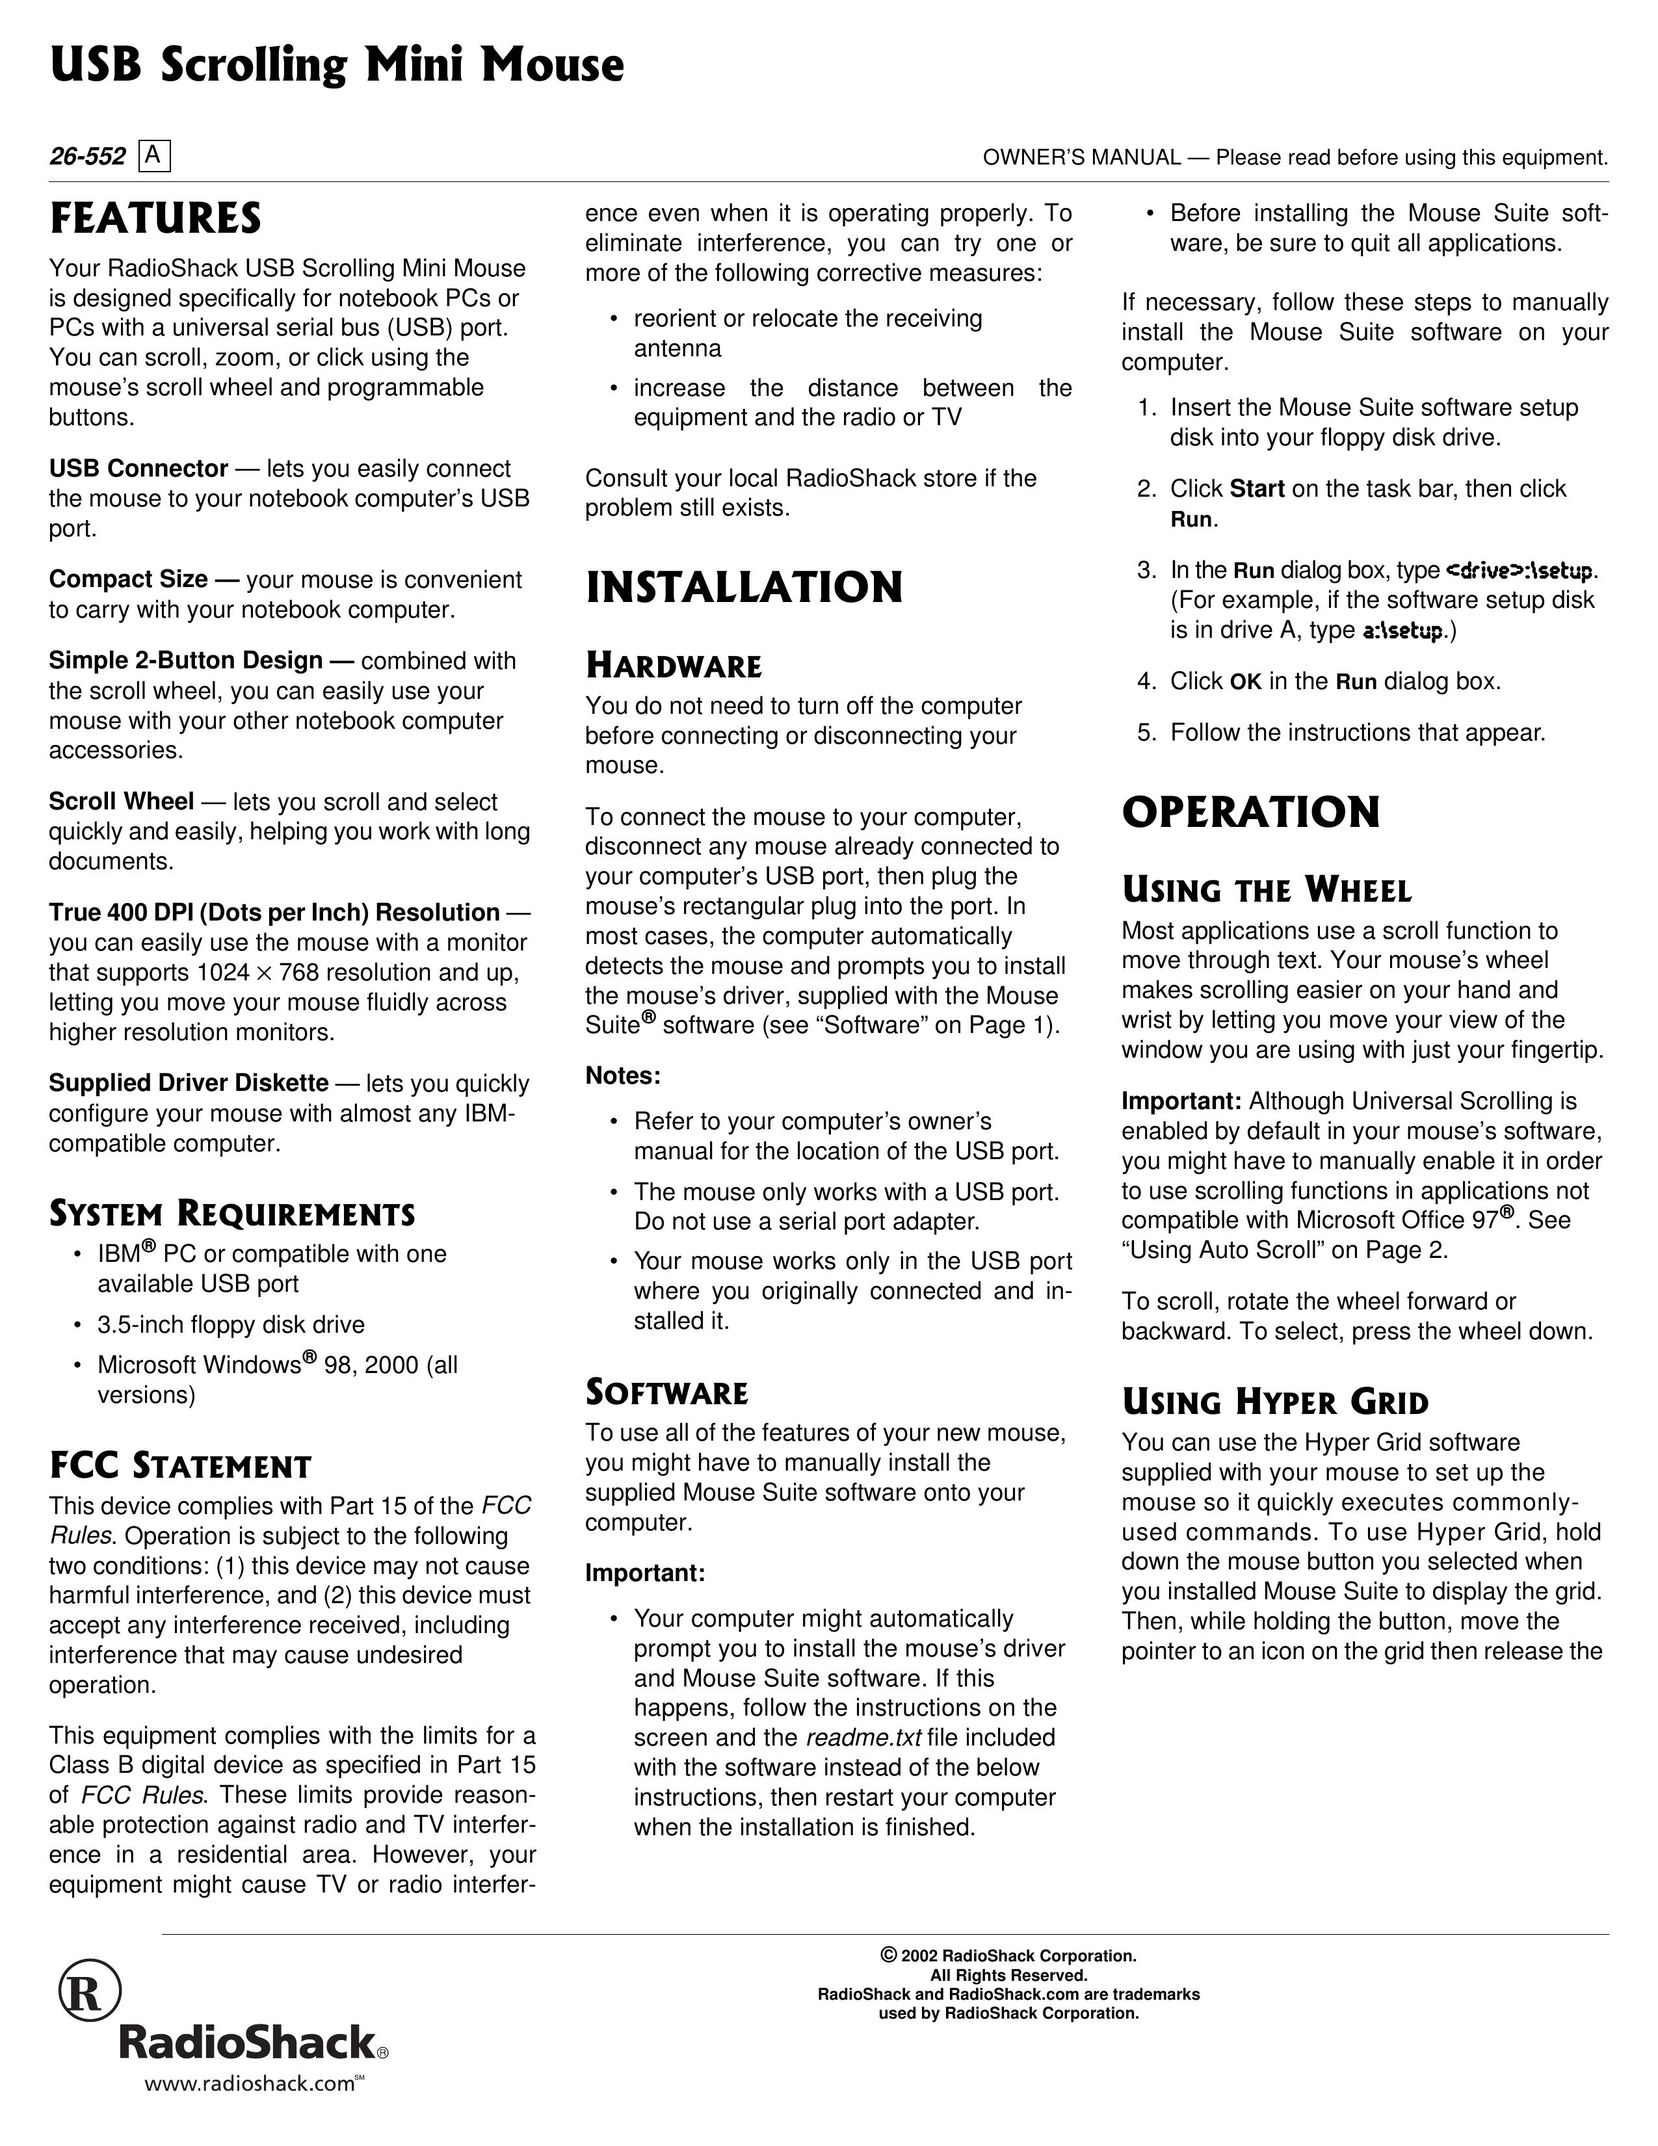 Radio Shack 26-552 A Mouse User Manual